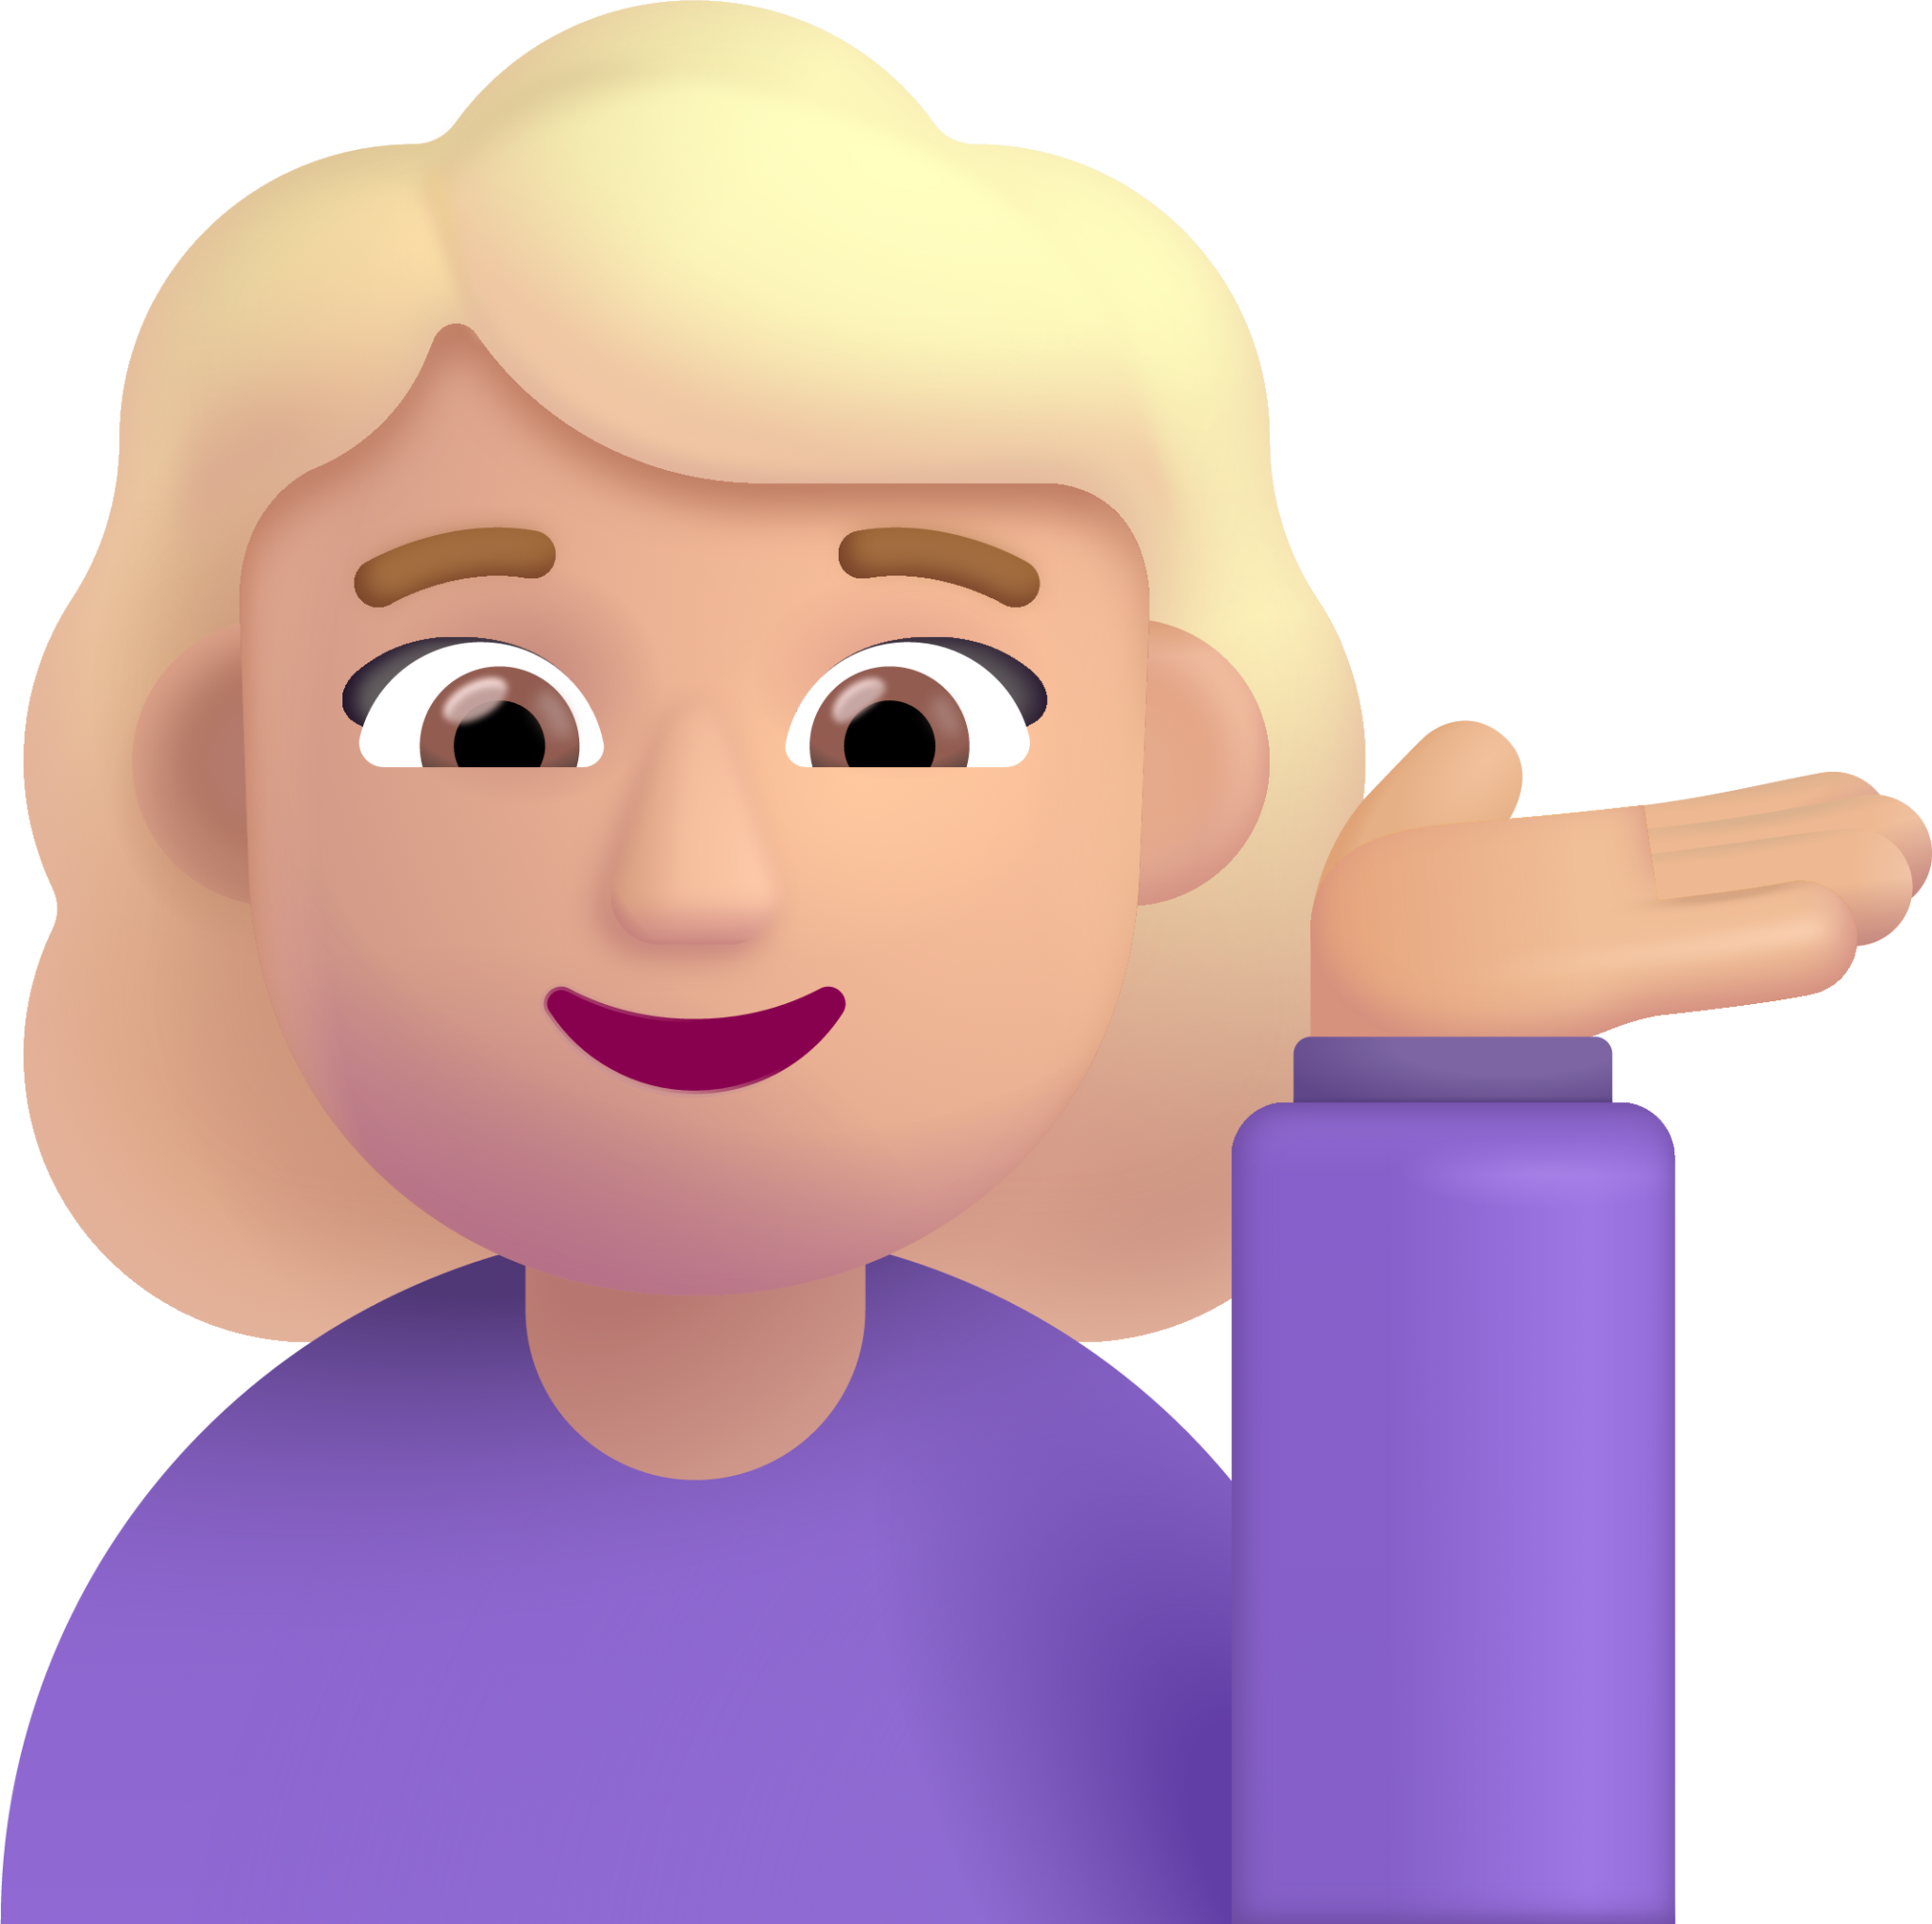 woman tipping hand medium light emoji